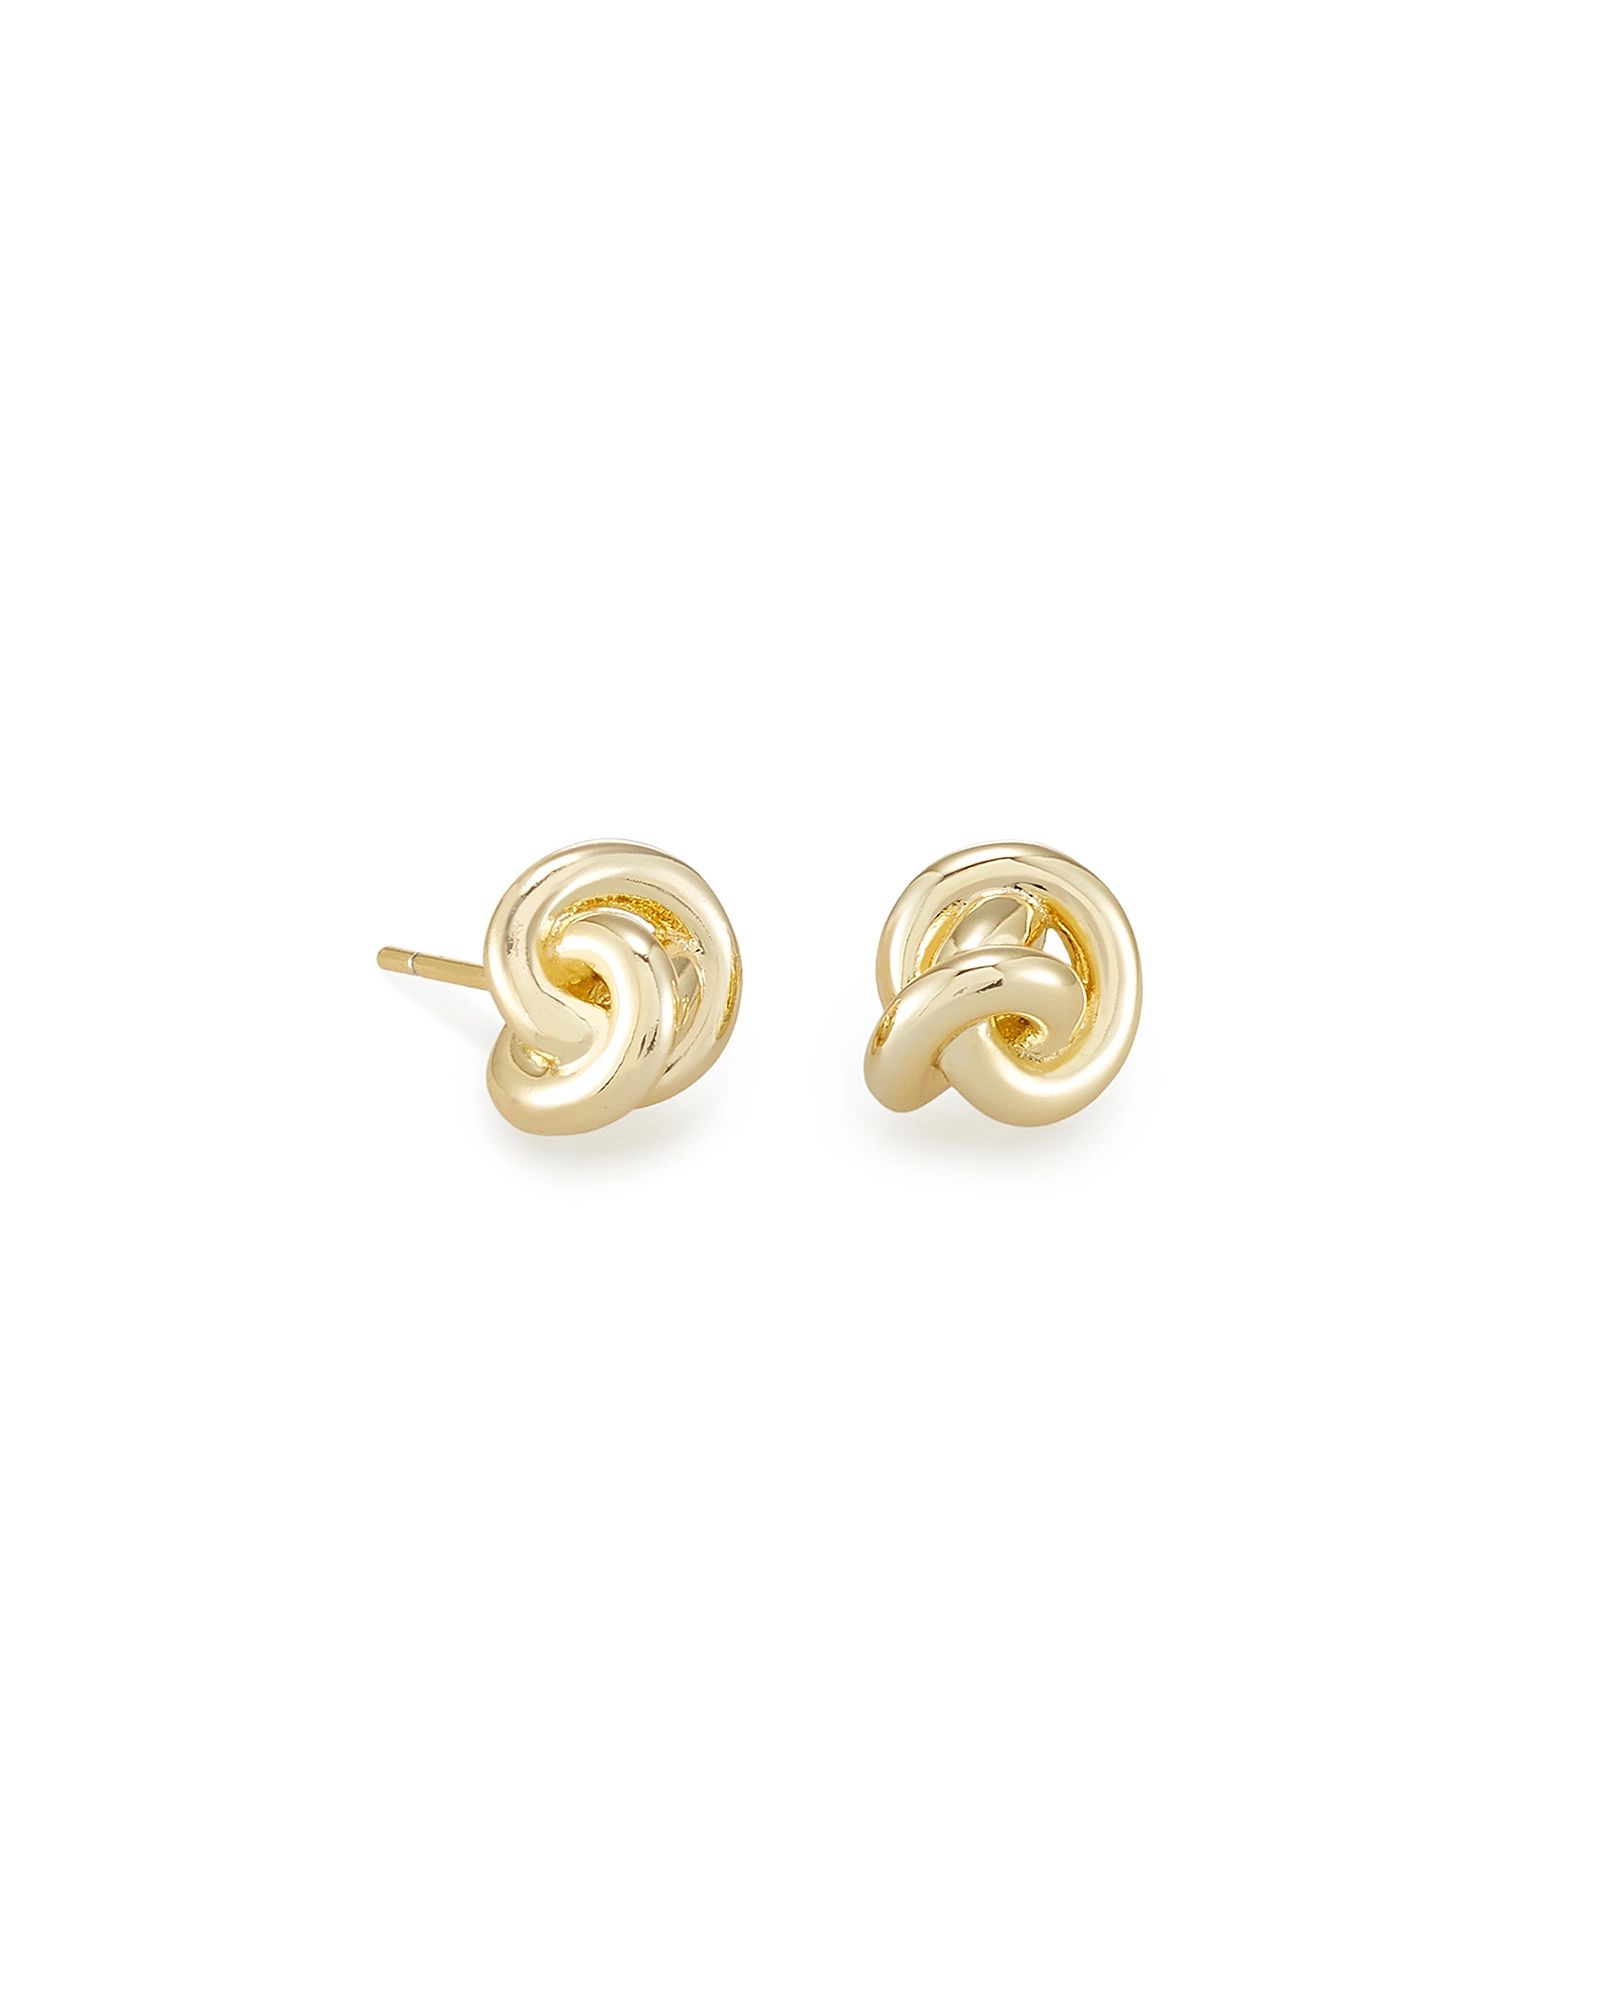 Presleigh Stud Earrings in Gold | Kendra Scott